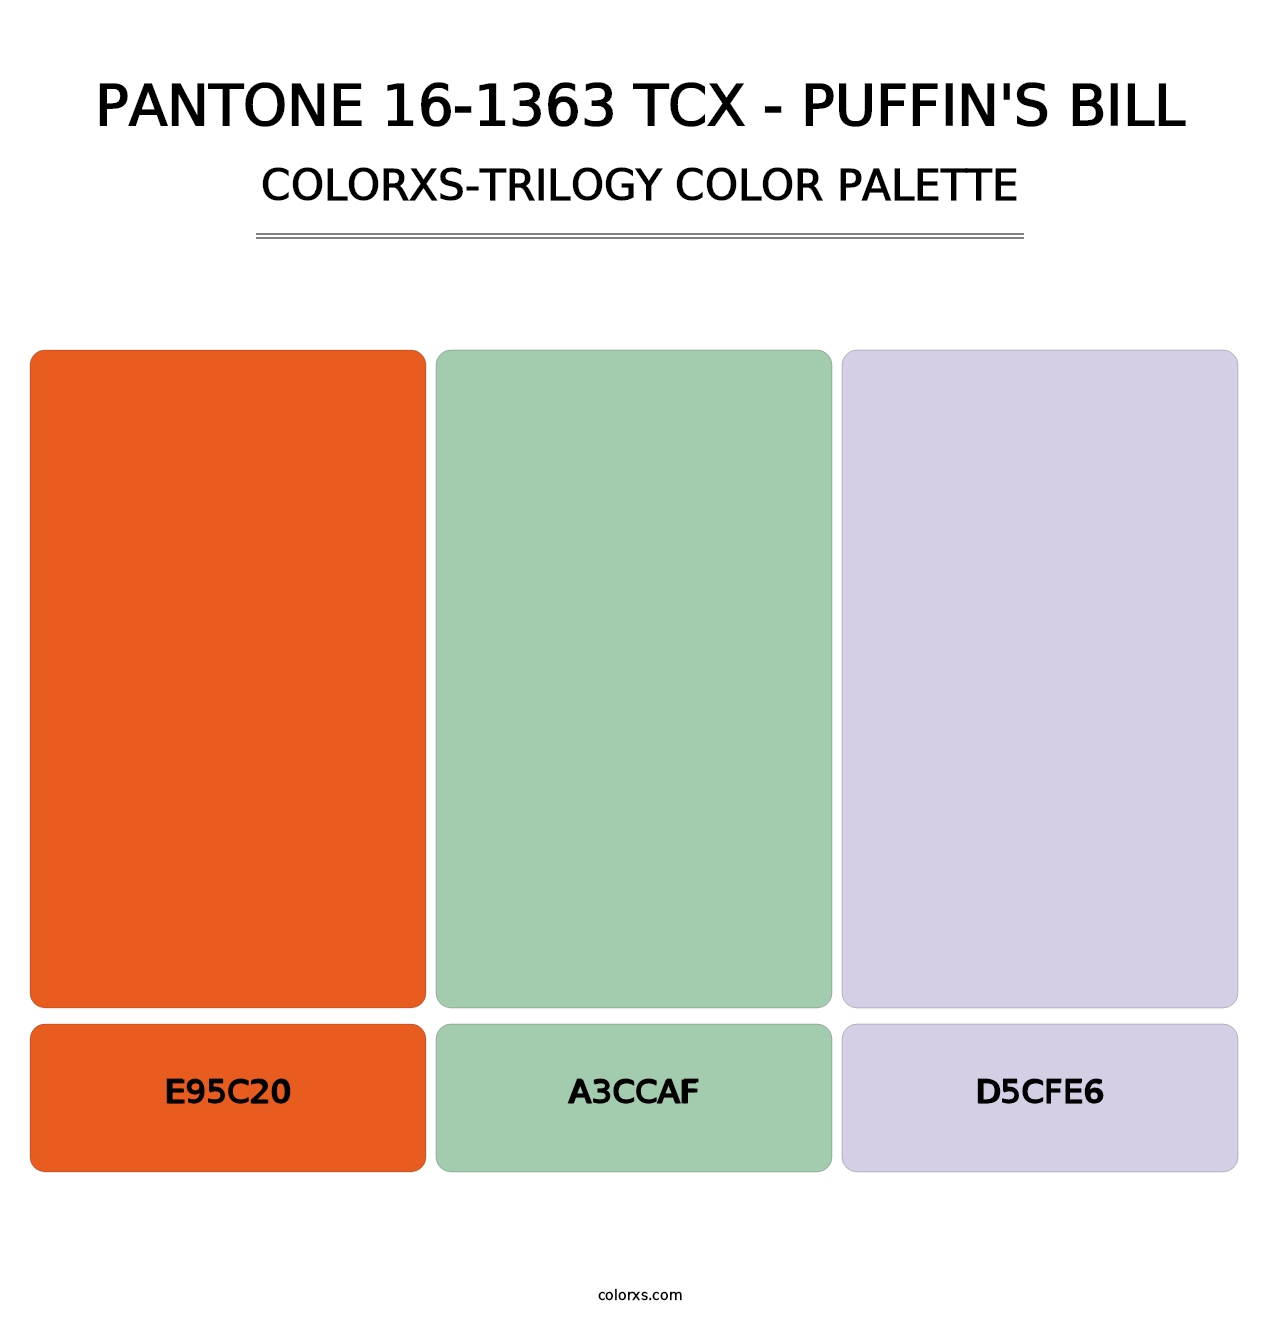 PANTONE 16-1363 TCX - Puffin's Bill - Colorxs Trilogy Palette